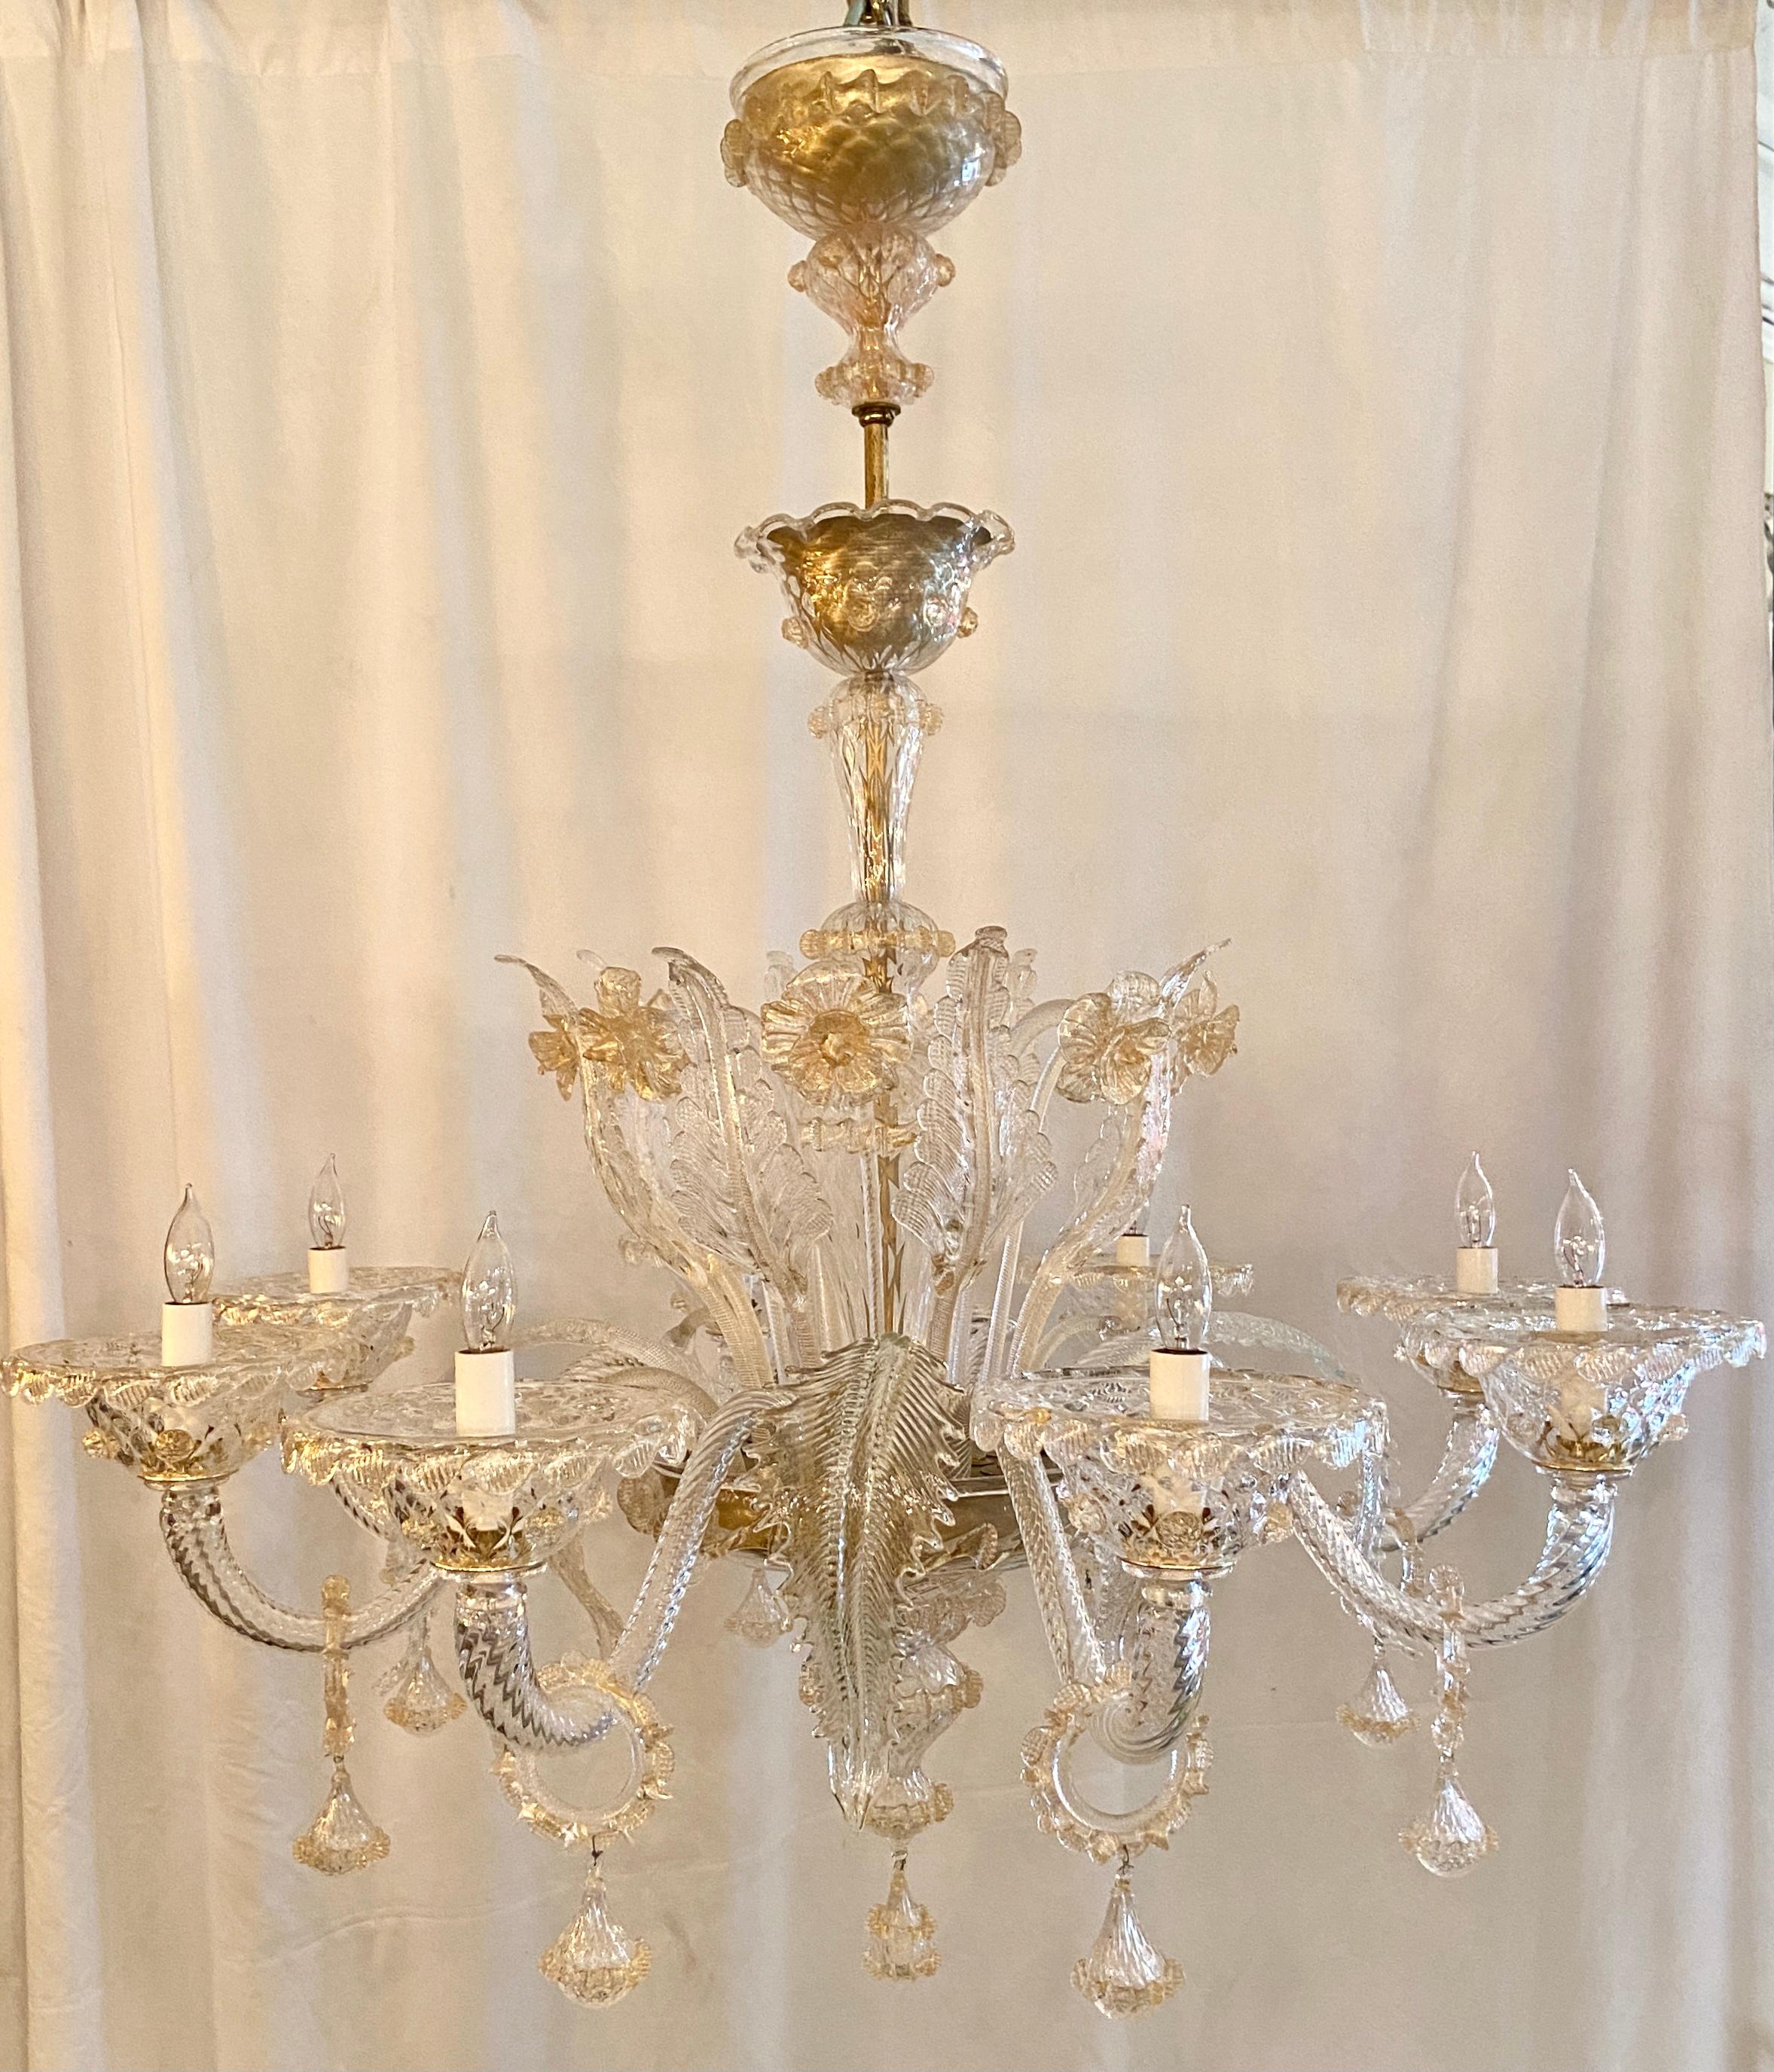 Splendid antique Italian Venetian glass 8-light chandelier, Circa 1930s-1940s. Clear, rose and golden hues.